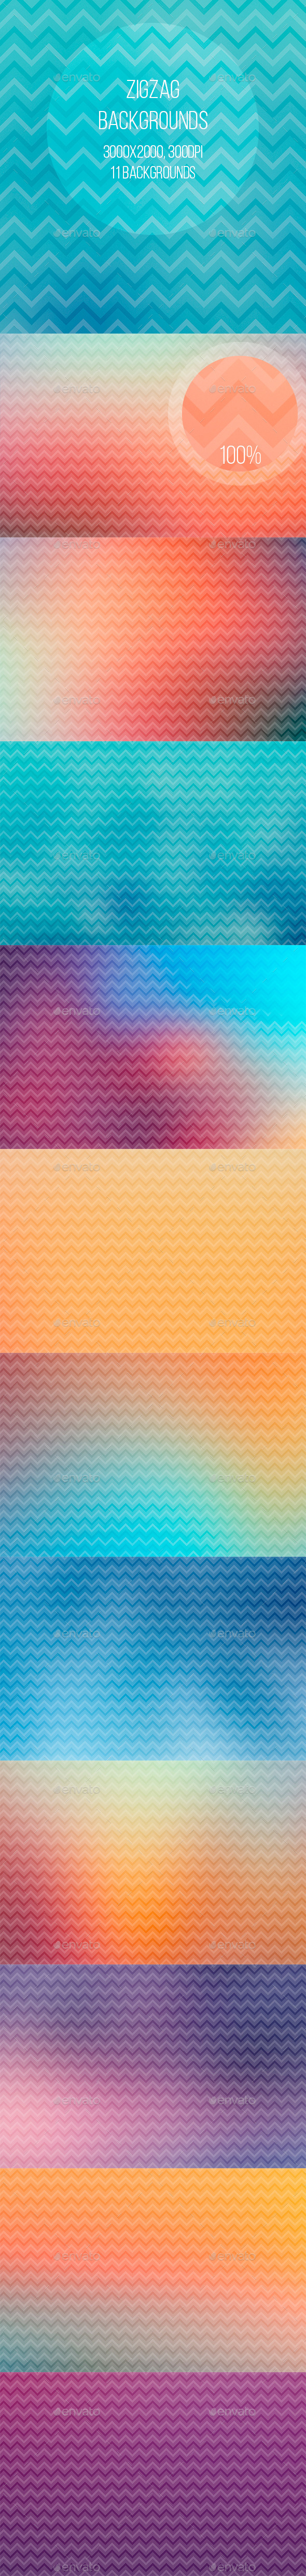 Gambar Abstrak Zigzag Full Color Tinkytyler Org Stock Photos Graphics